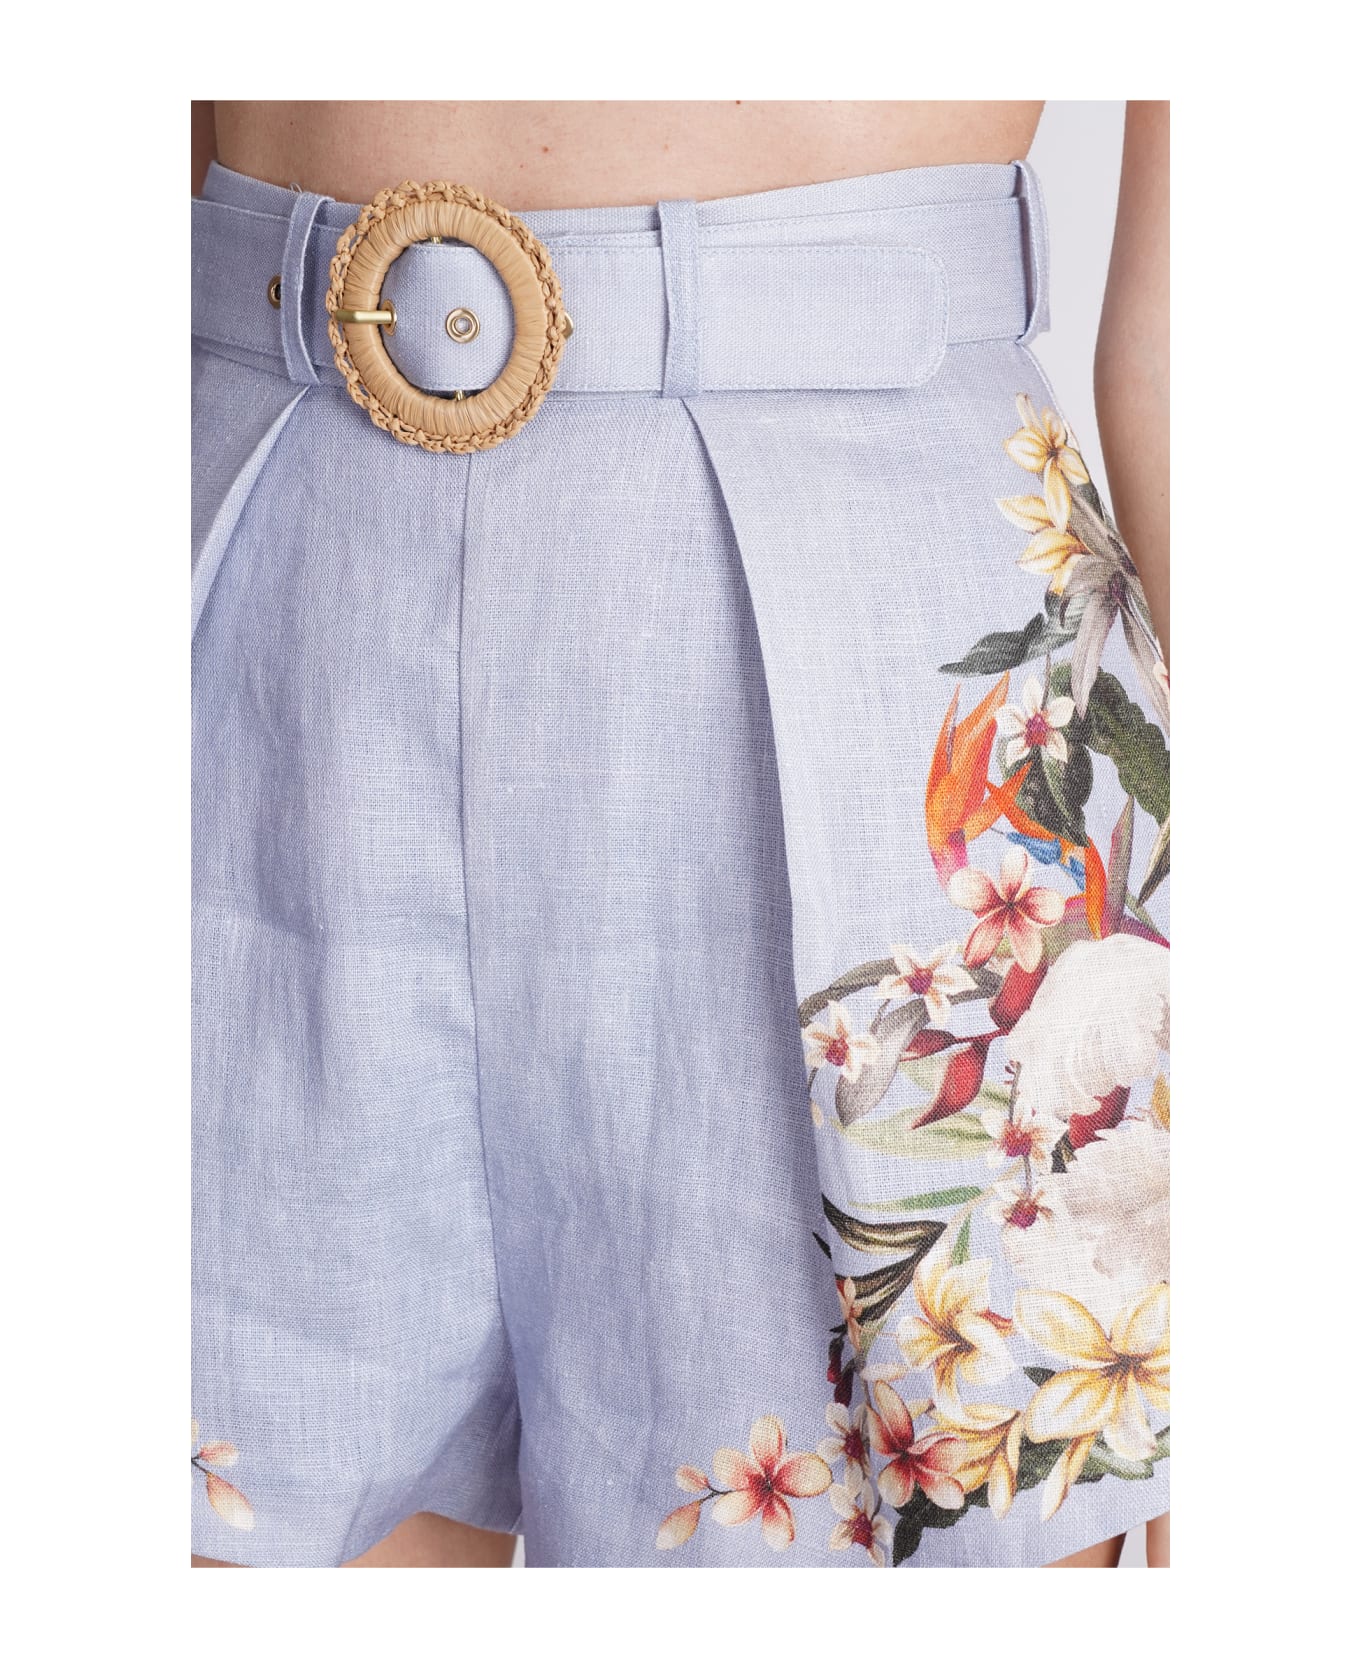 Zimmermann Belted Shorts - Blplm Blue Palm ショートパンツ